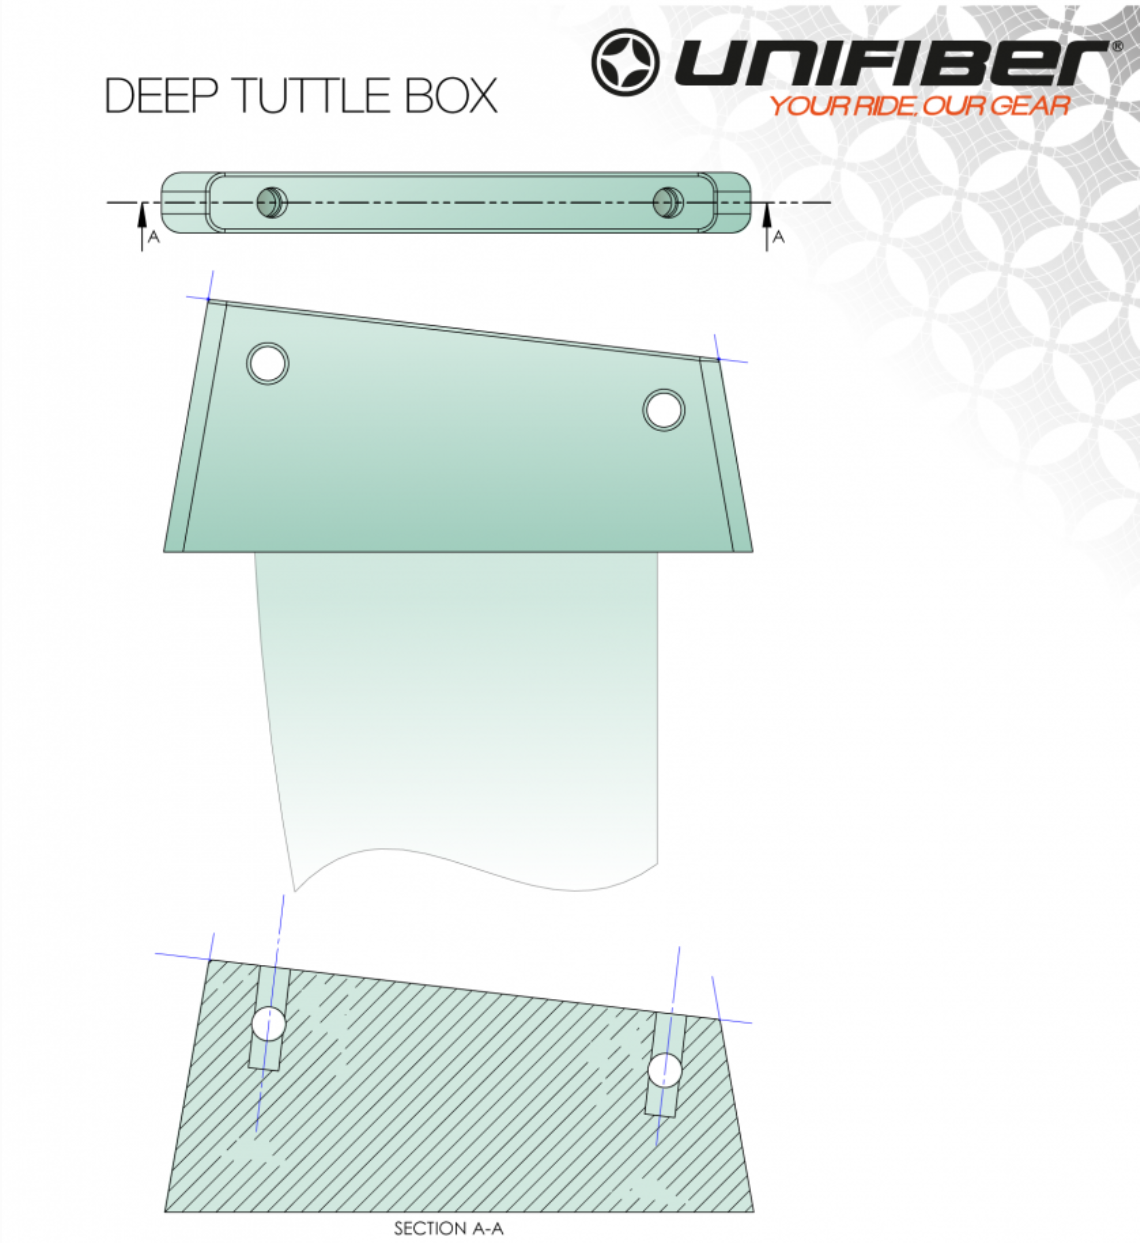 Deep Tuttle Box